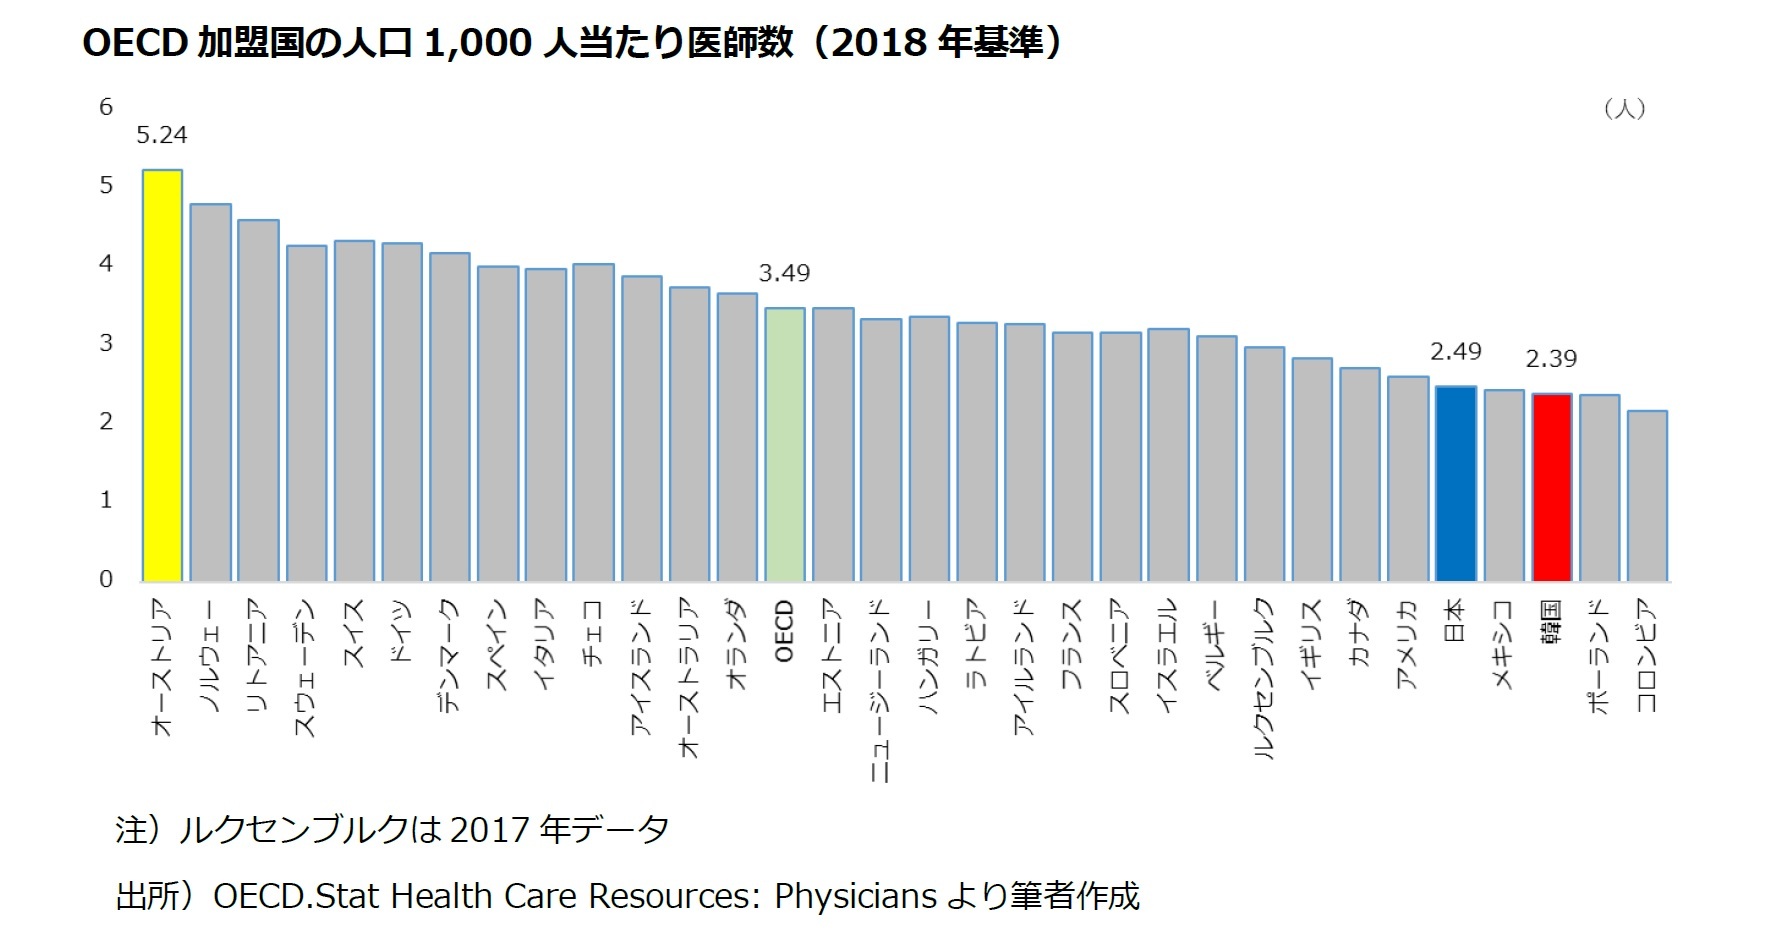 OECD加盟国の人口1,000人当たり医師数（2018年基準）